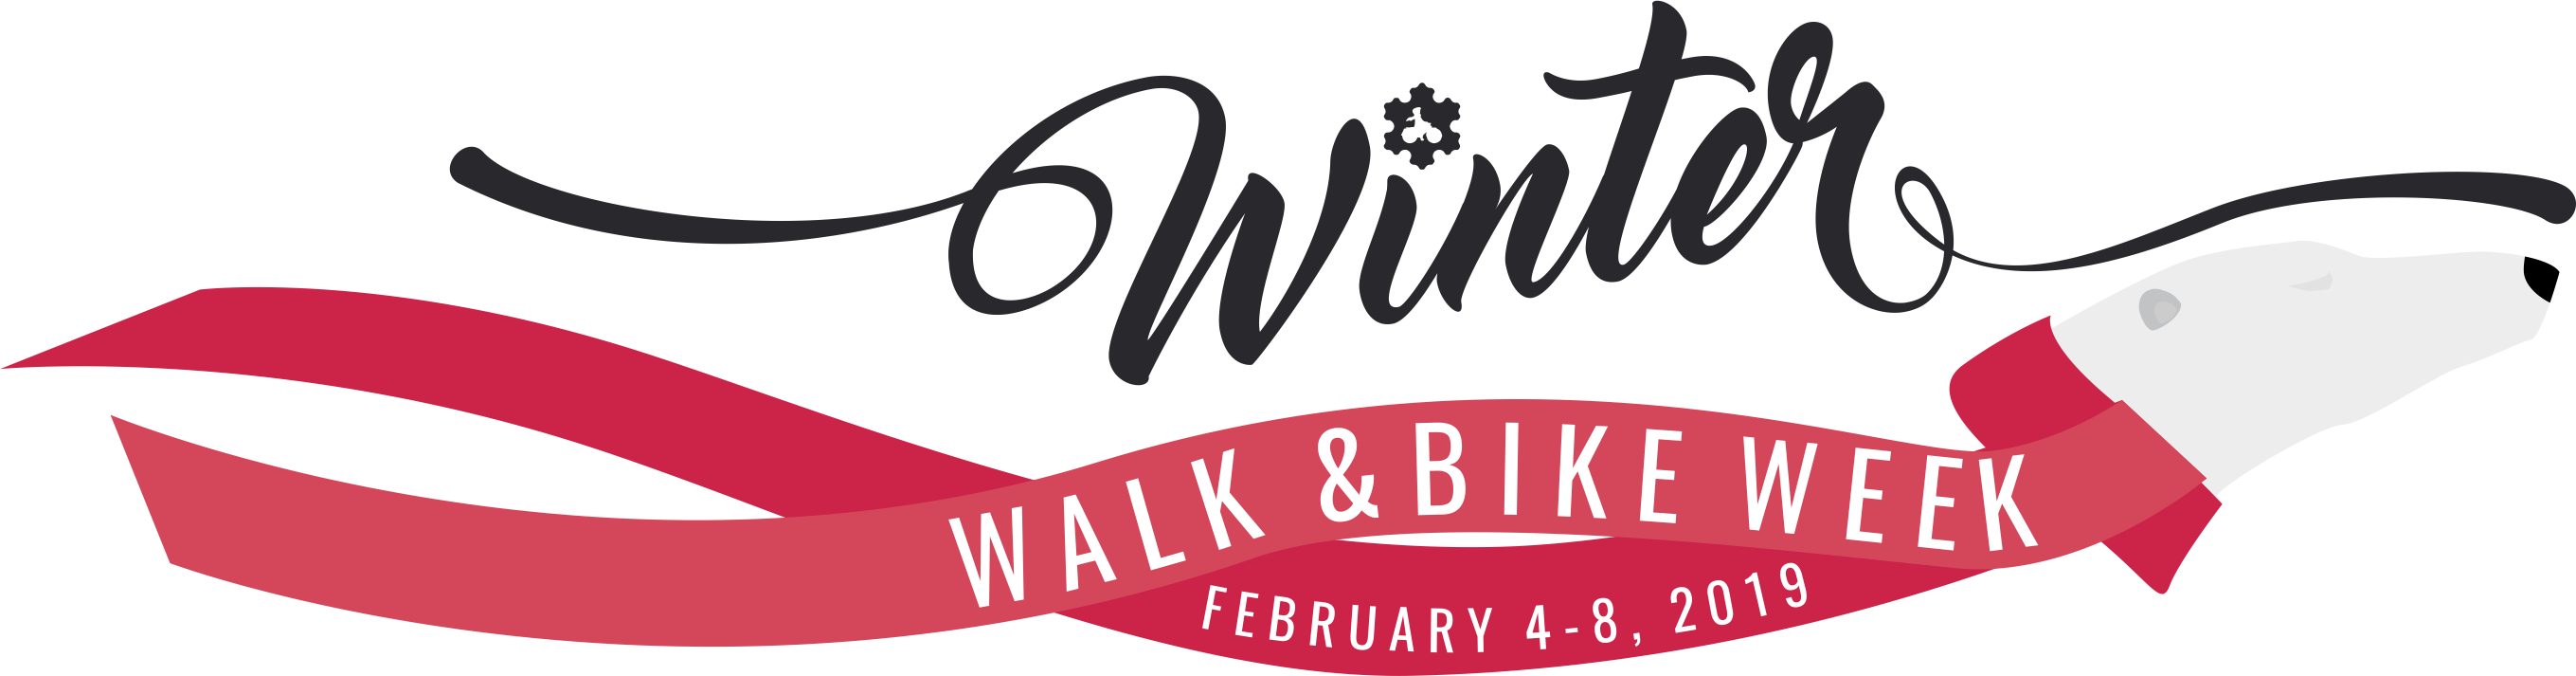 walk and bike banner.png detail image